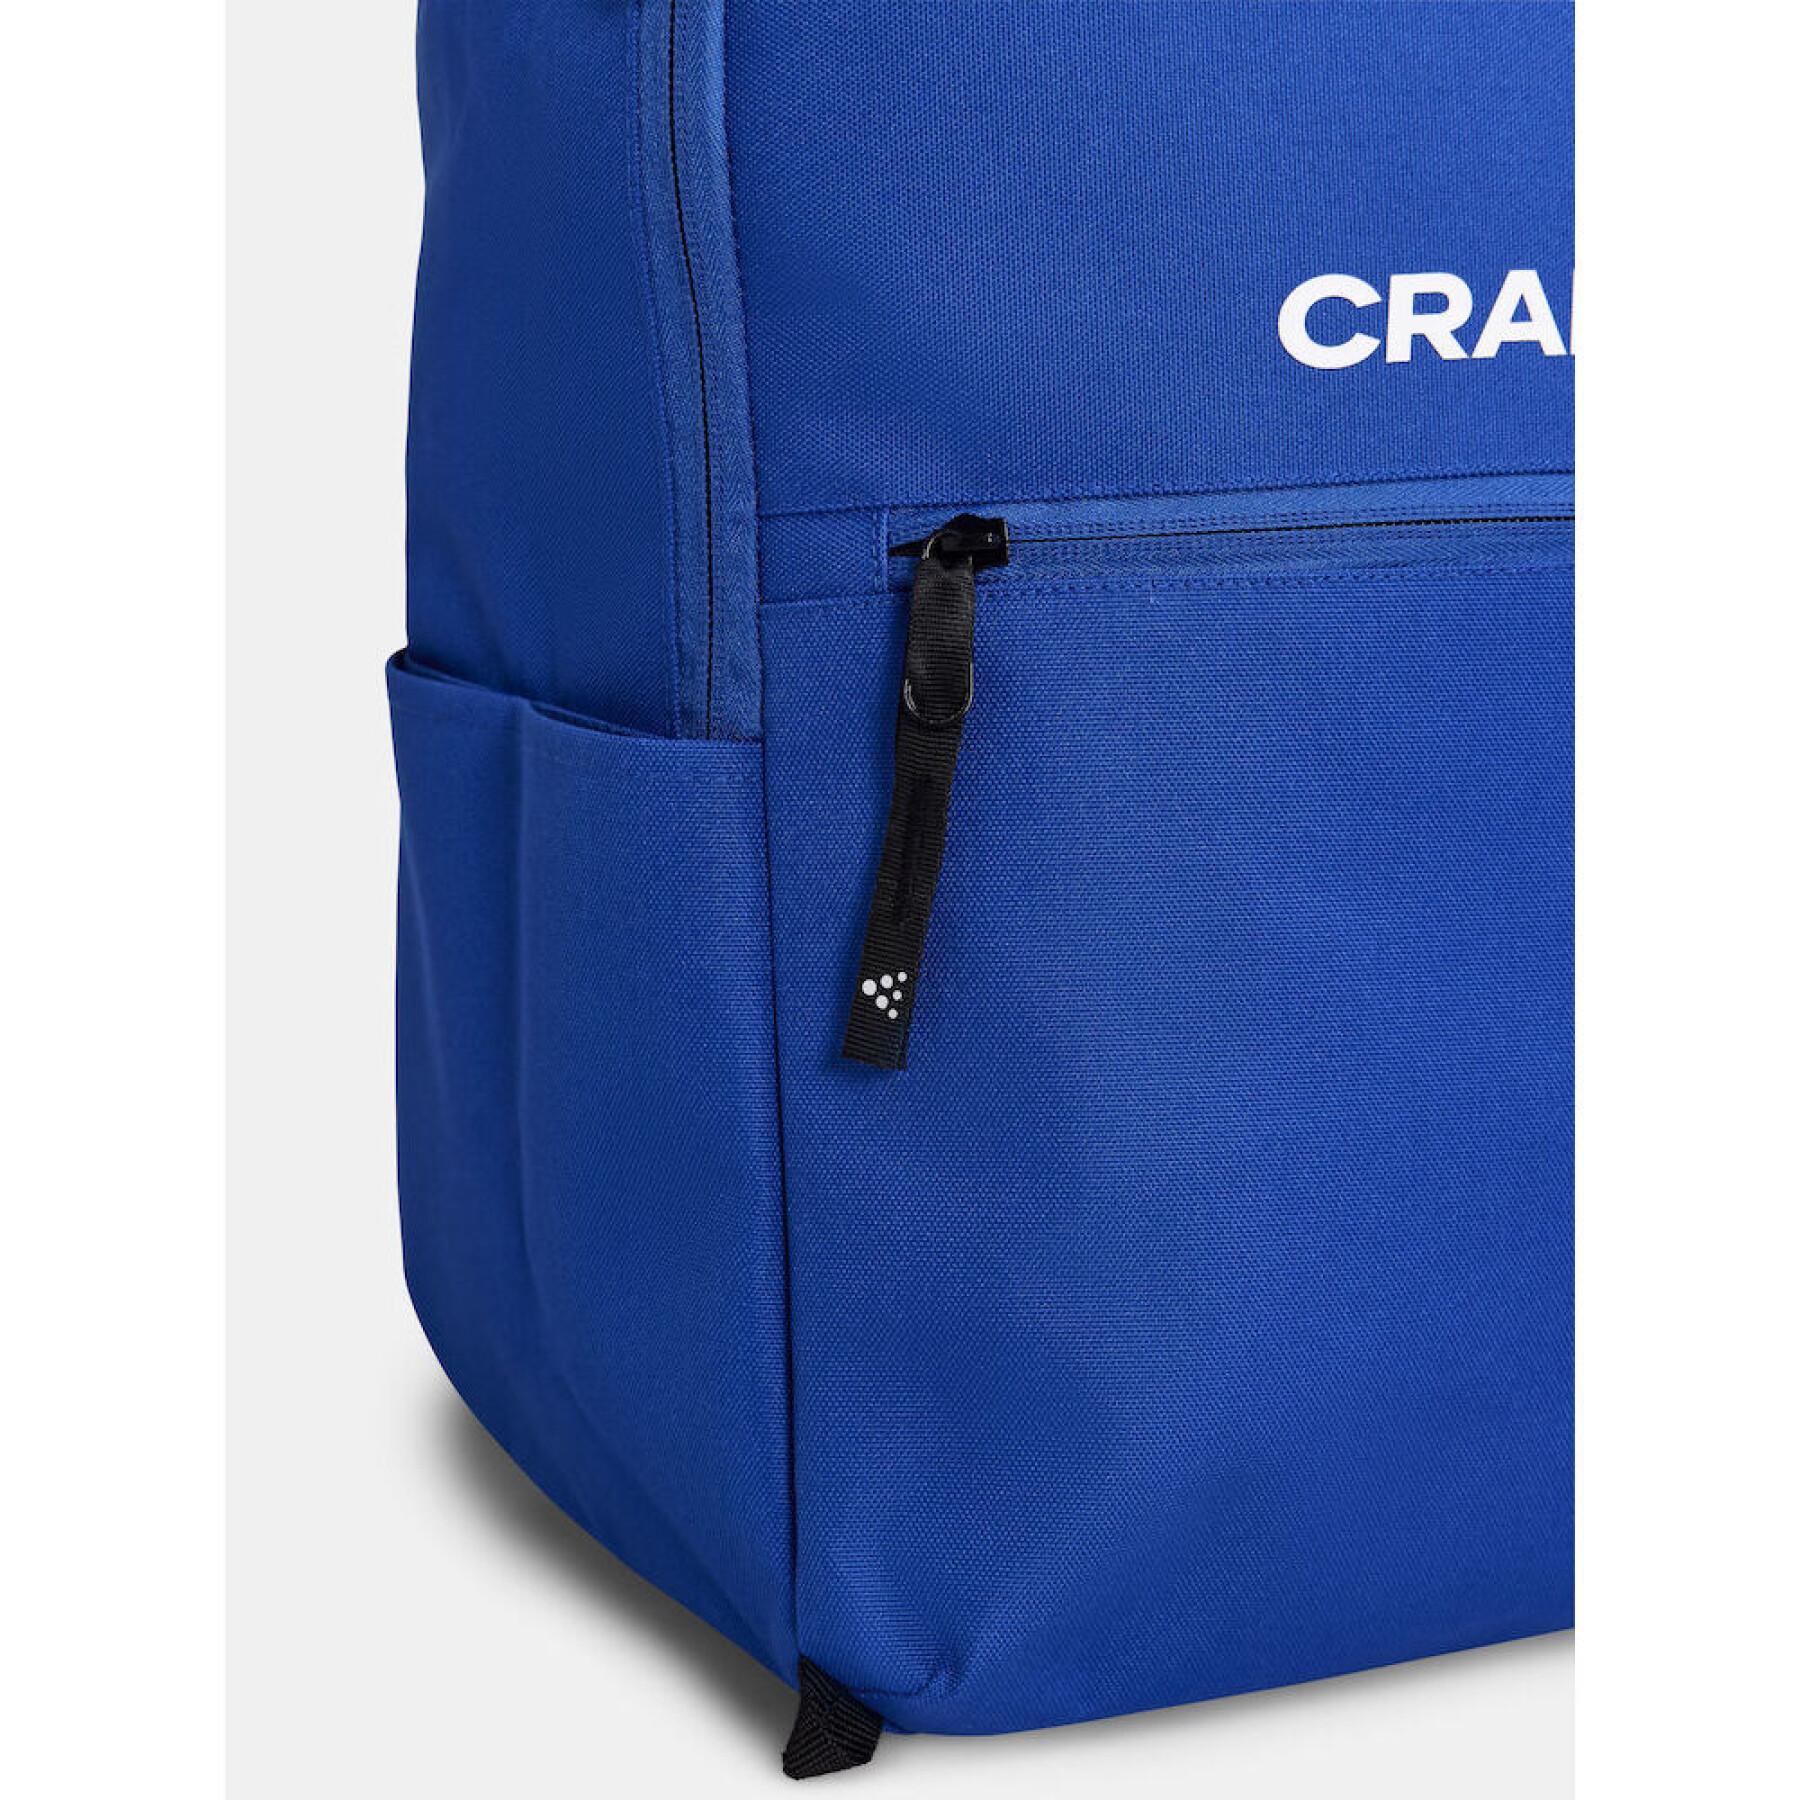 Backpack Craft Squad 2.0 16 L